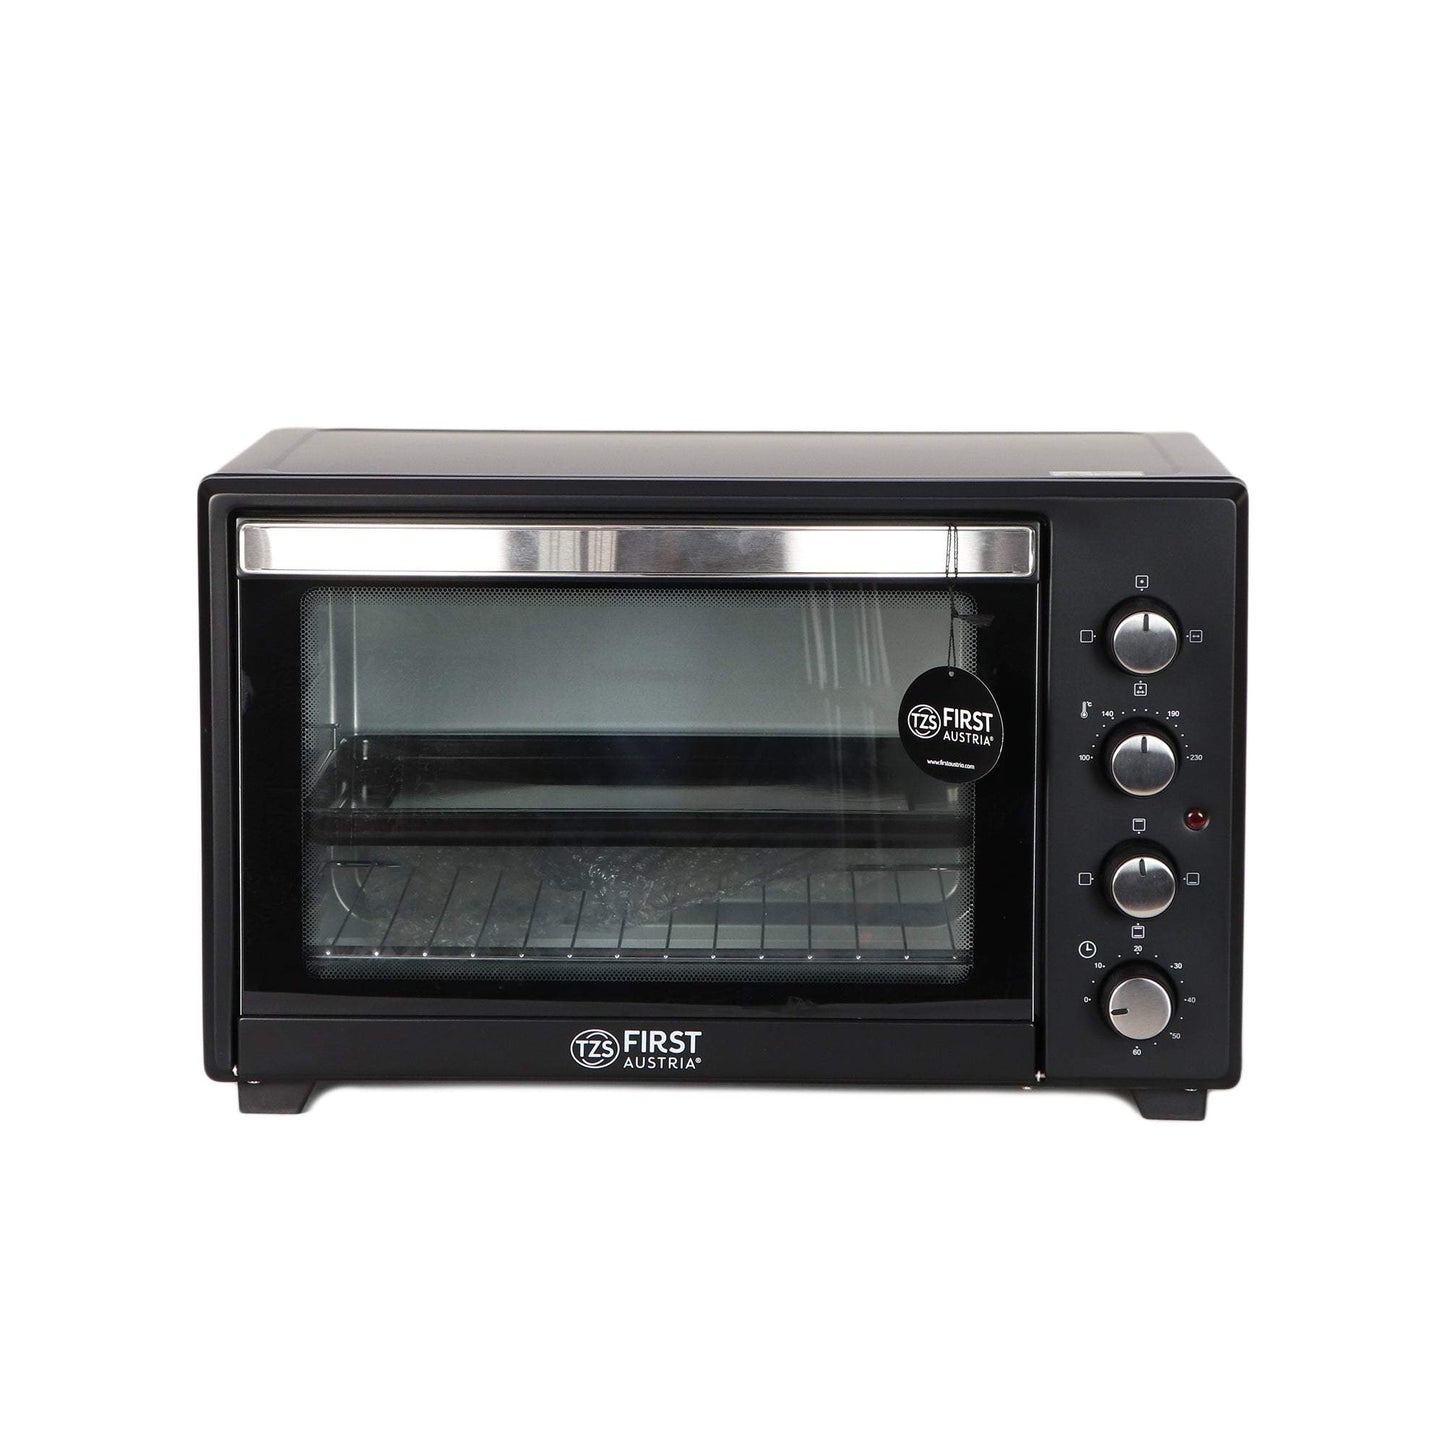 TZS First Mini oven 45 liters | 2000 watts | digital-Royal Brands Co-